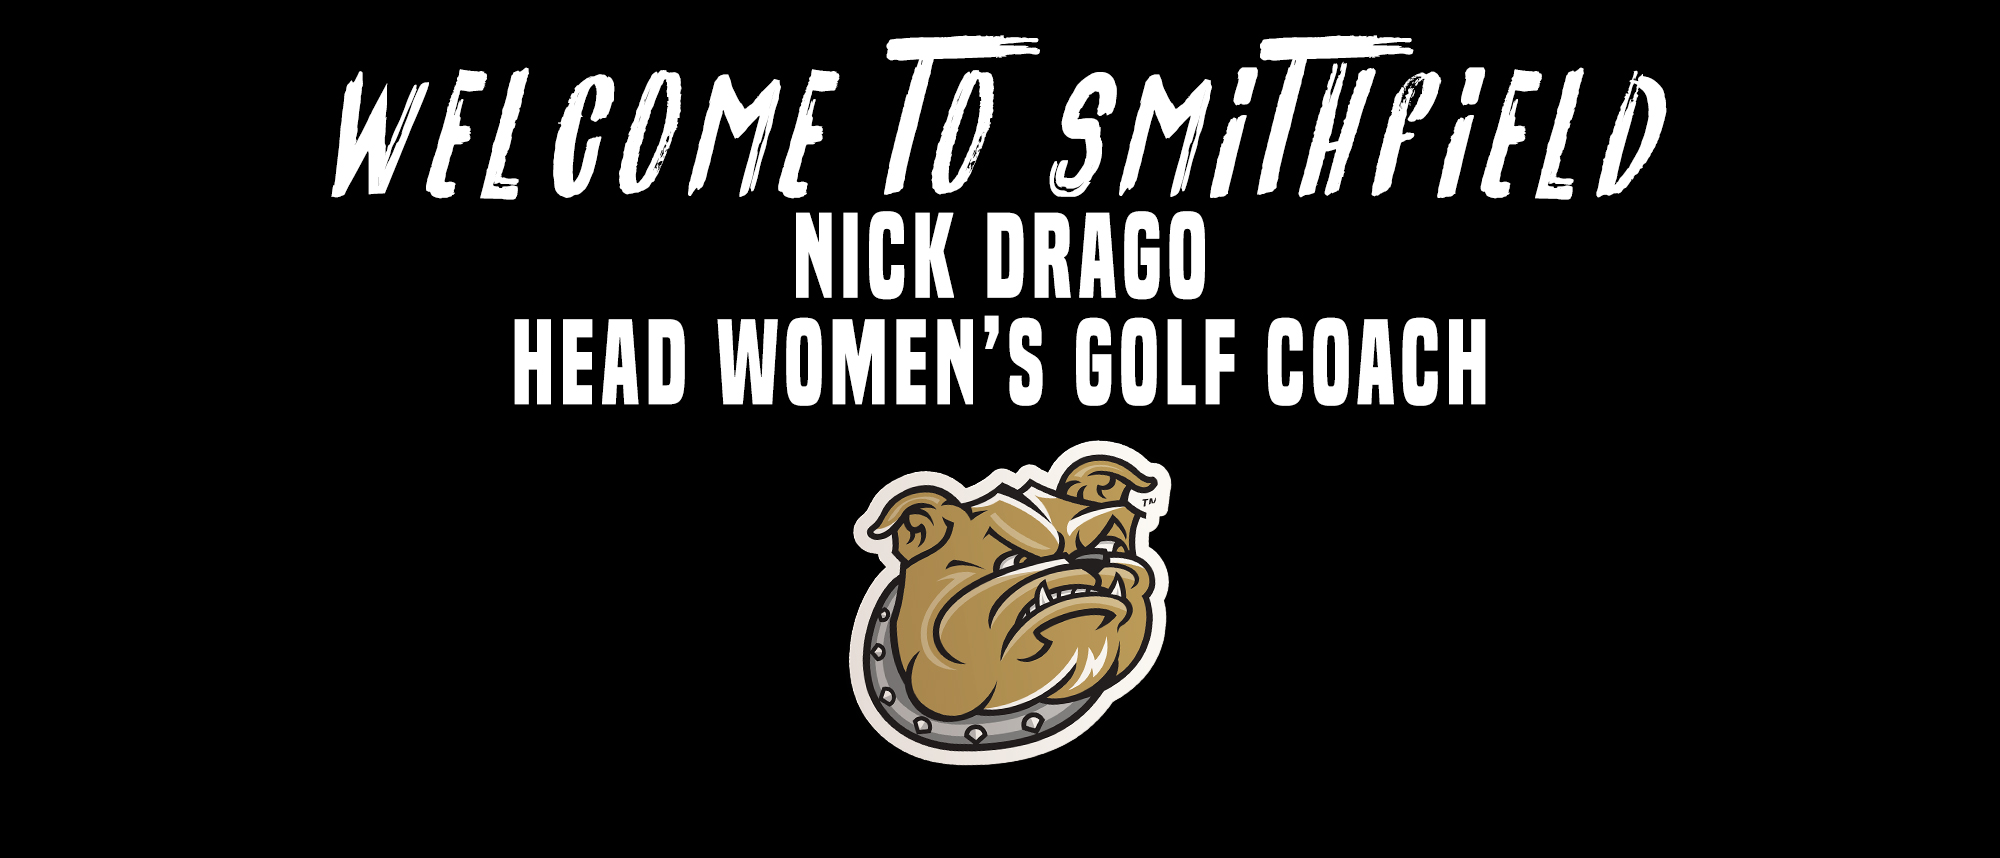 Drago named head women's golf coach